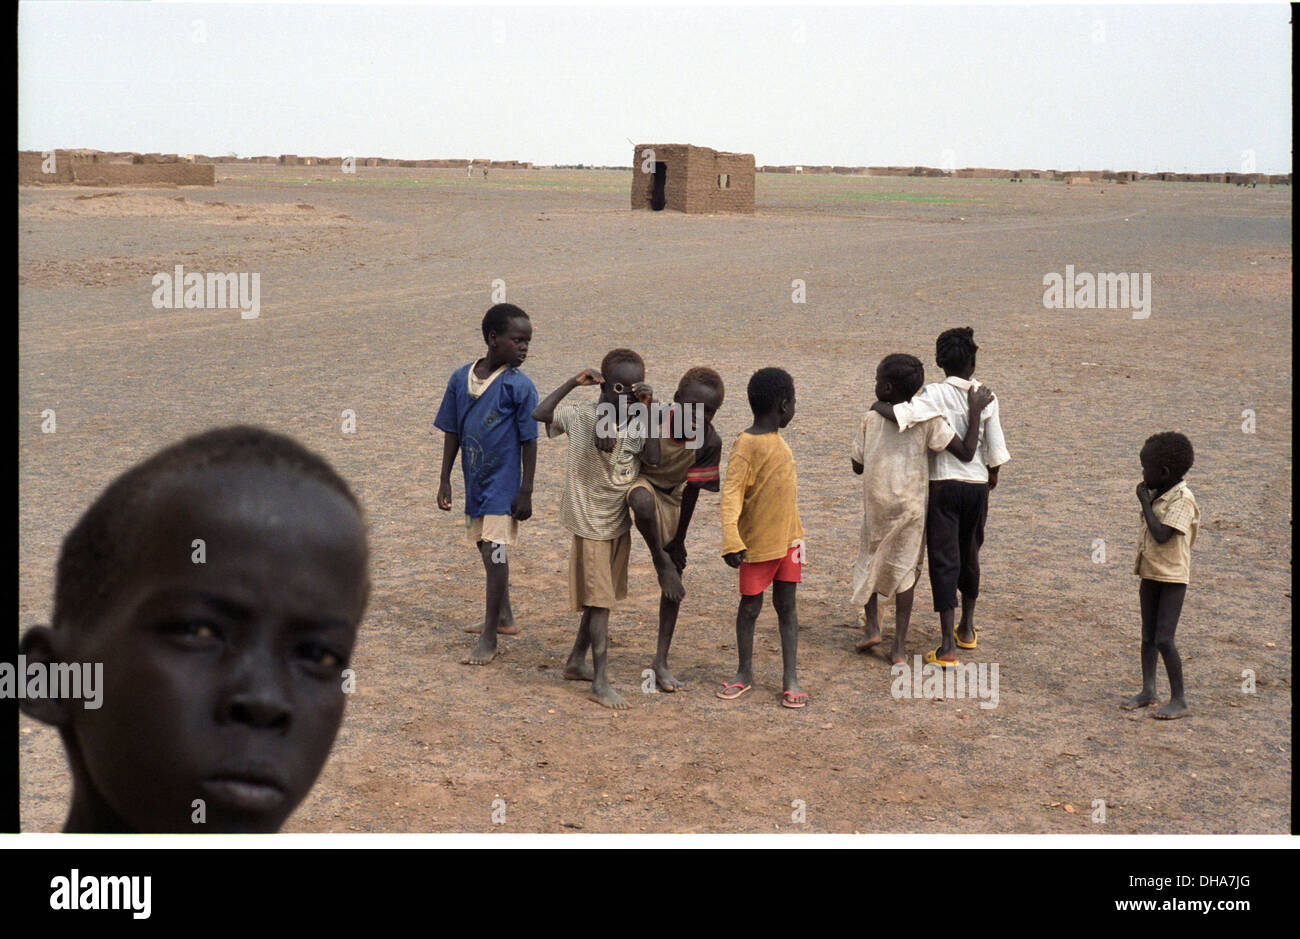 ipjr09440236aSeptember 2004 Gebeiaulia IDP Camp Khartoum Al Khartoum SudanChildren playing in the Gebeialia IDP Camp. Stock Photo